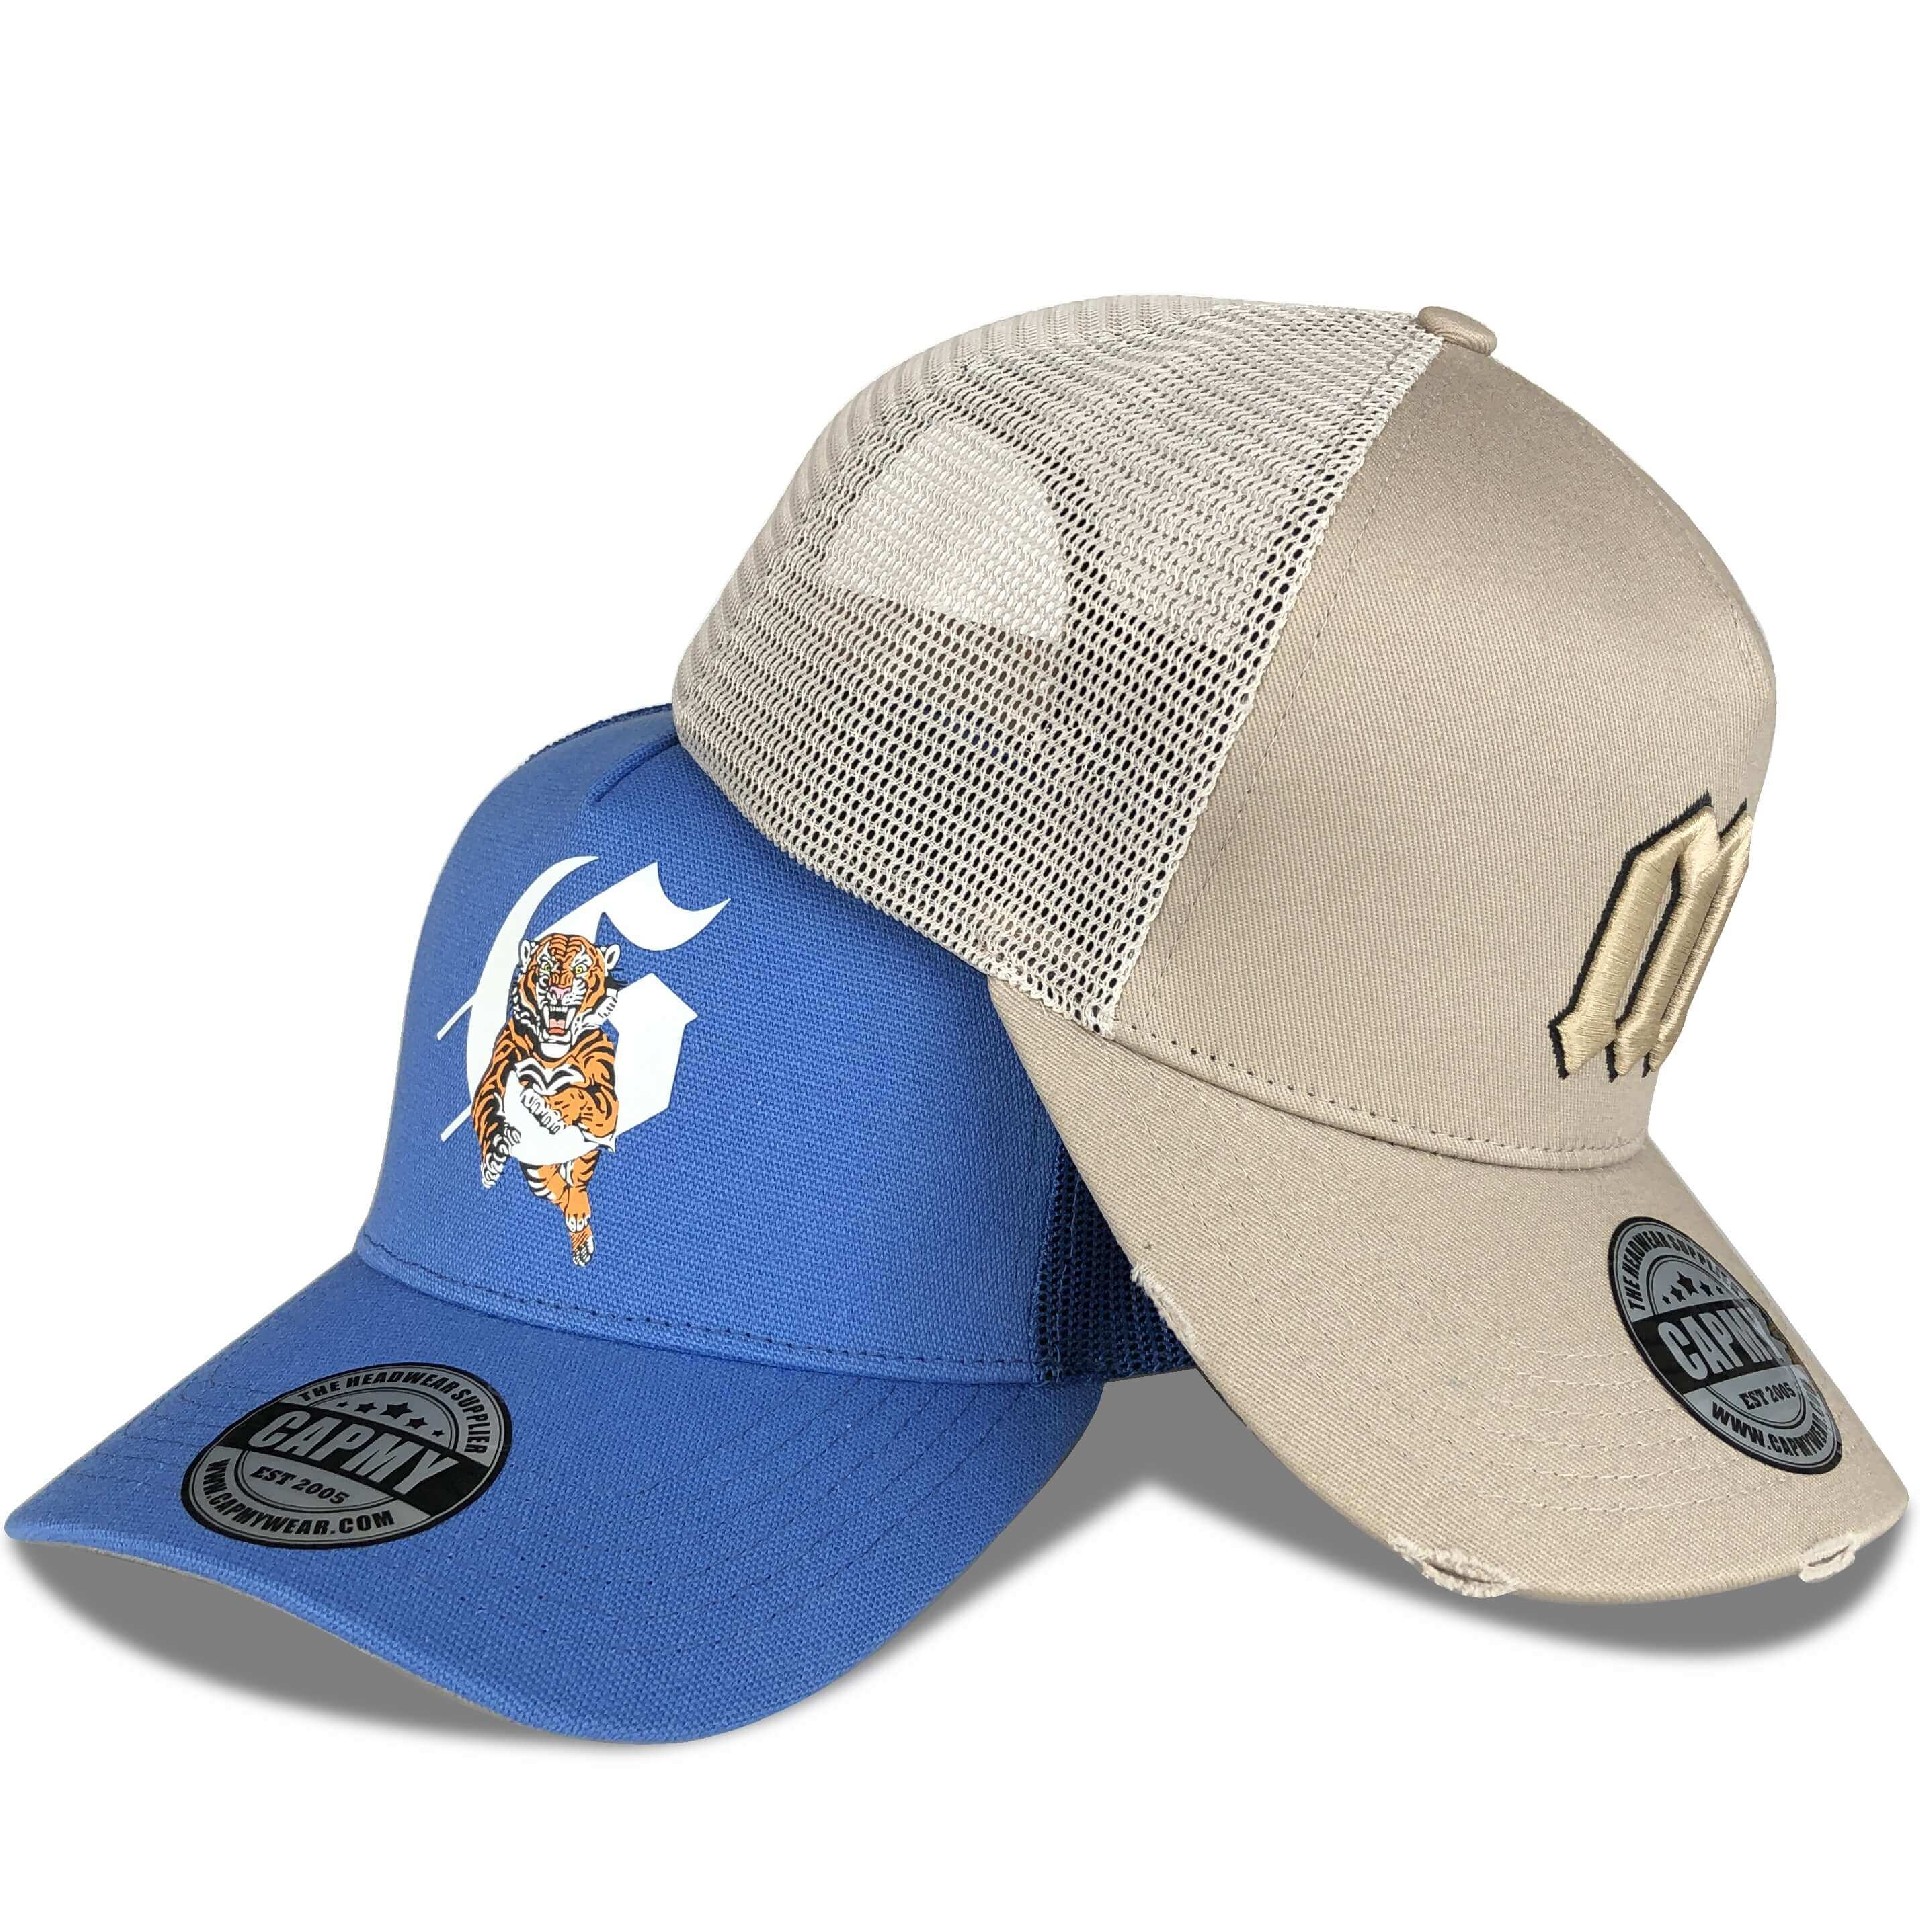 CMC-3101( Wholesale Embroidery Logo Logo Men Sports 5 Panel Distressed Rip Vintage Mesh Trucker Cap Hat Manufacturer)